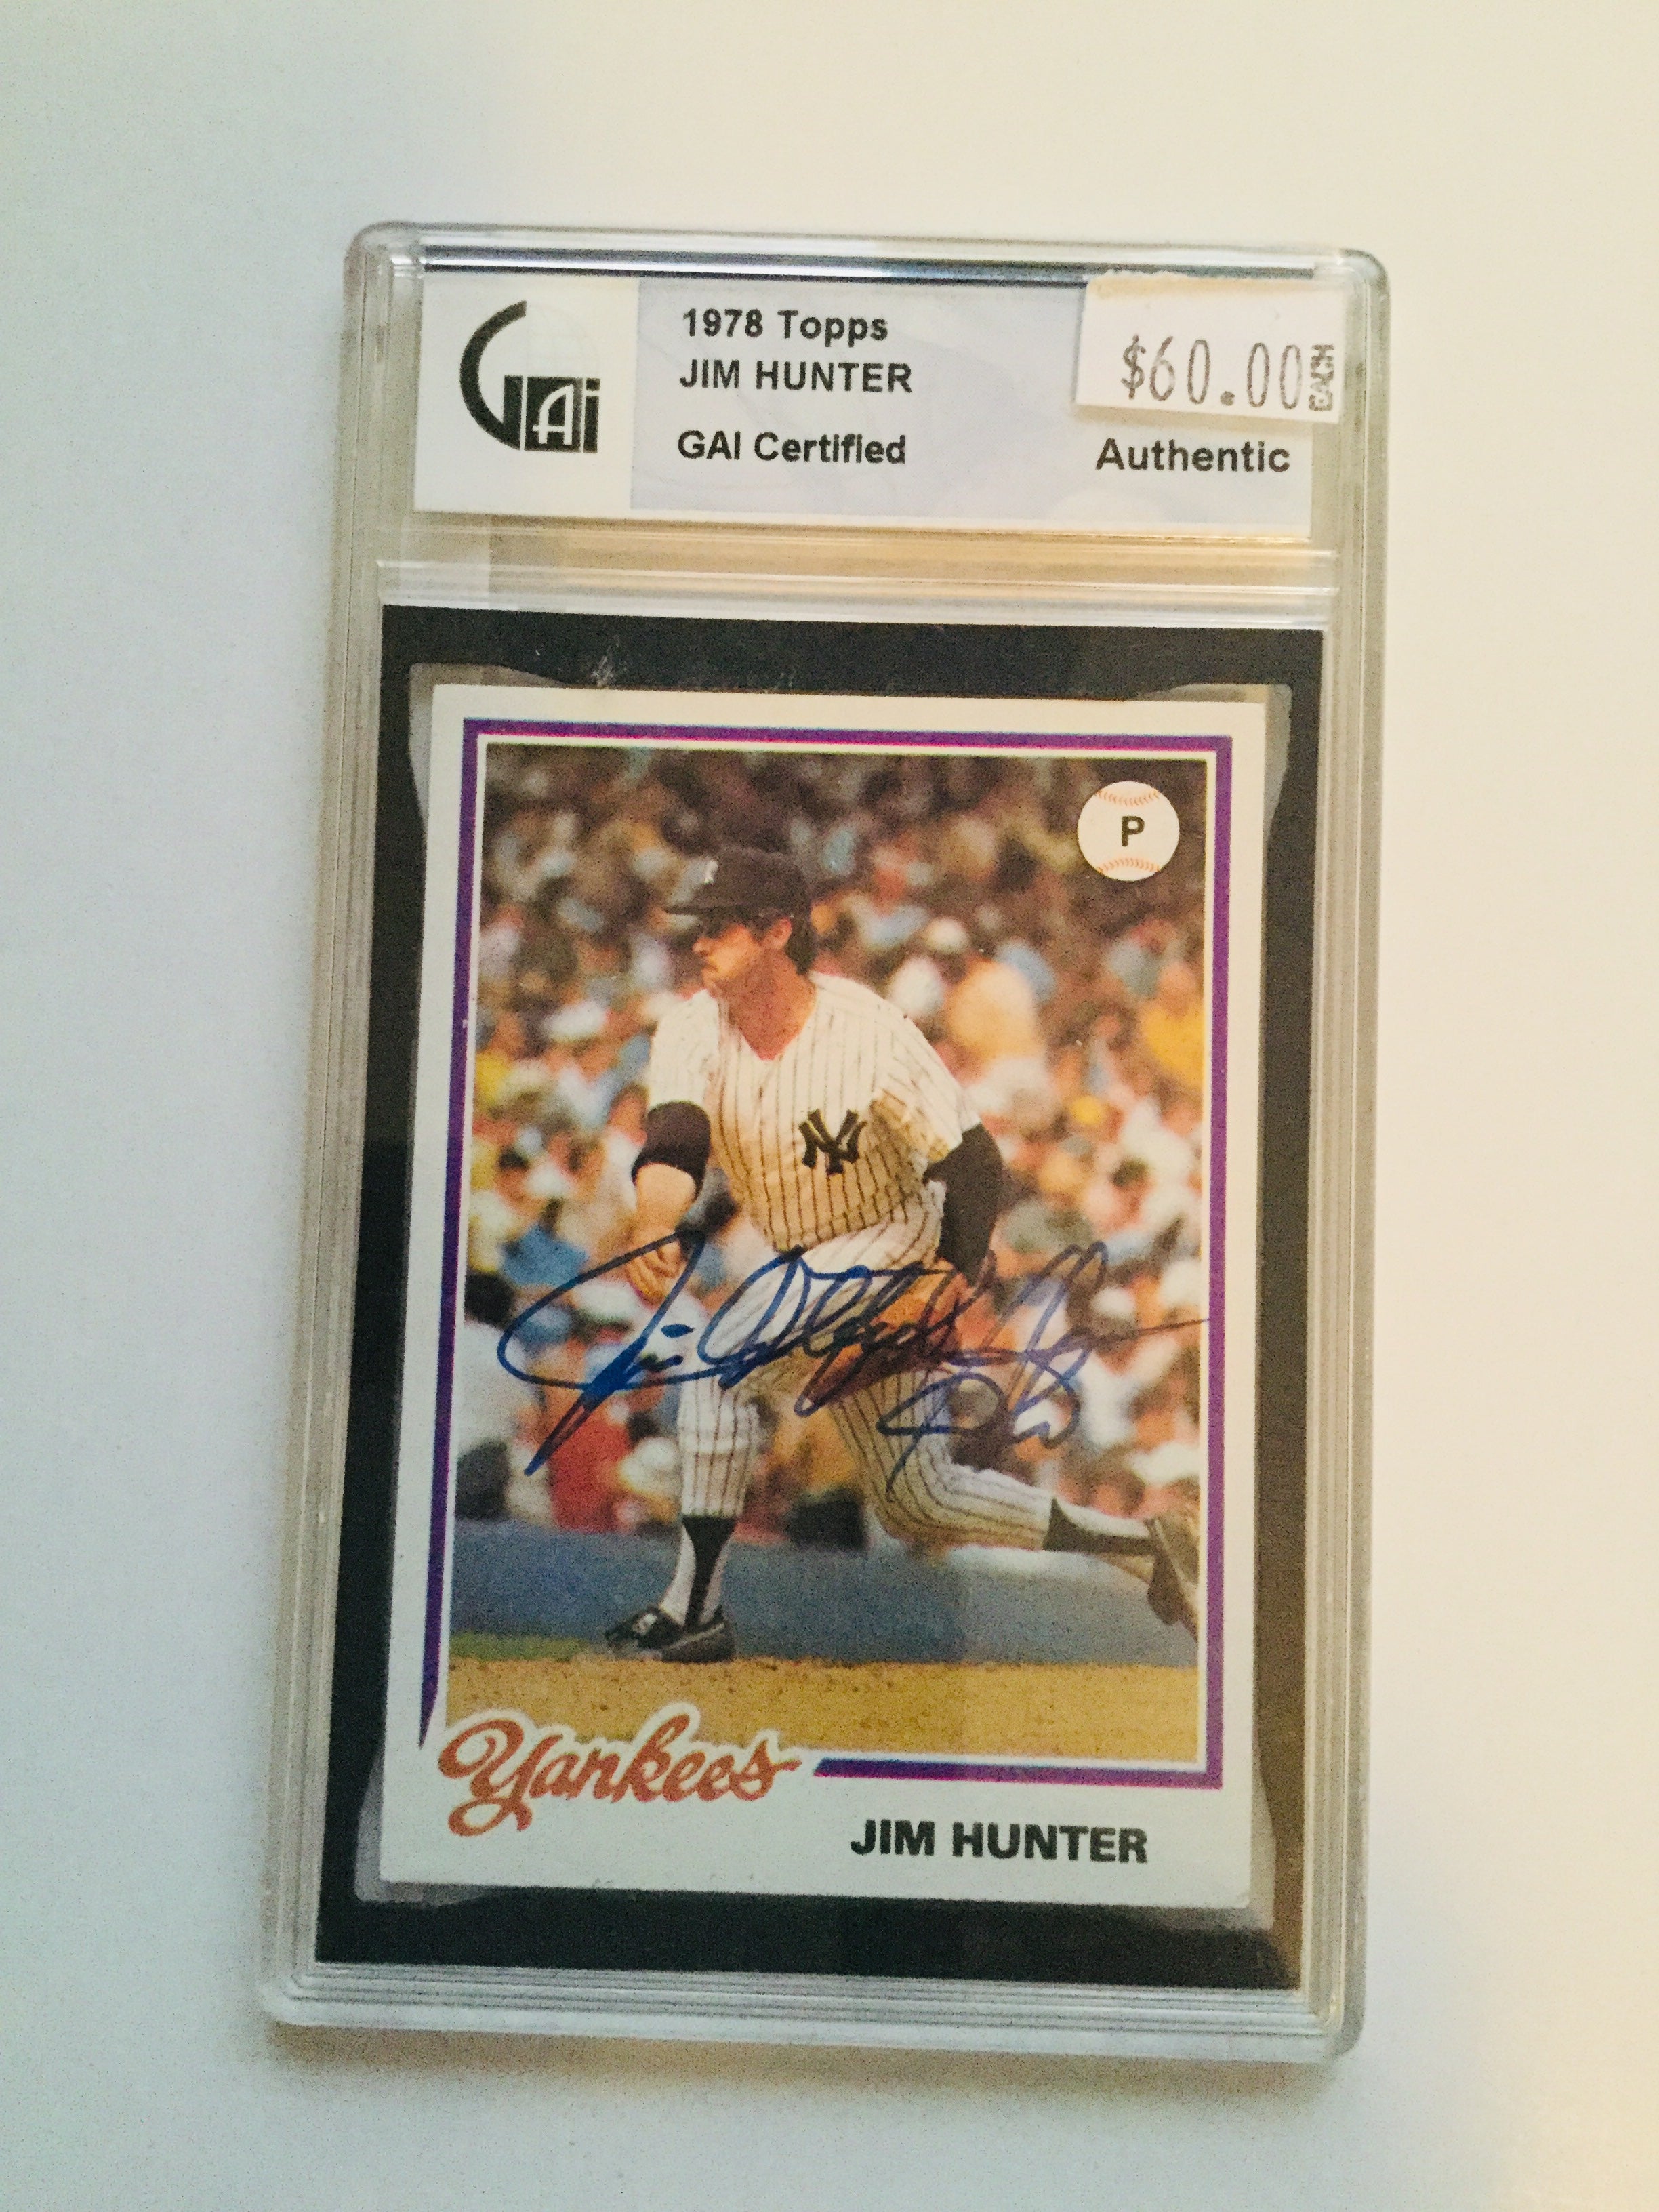 Jim catfish hunter Signed Certified Baseball card